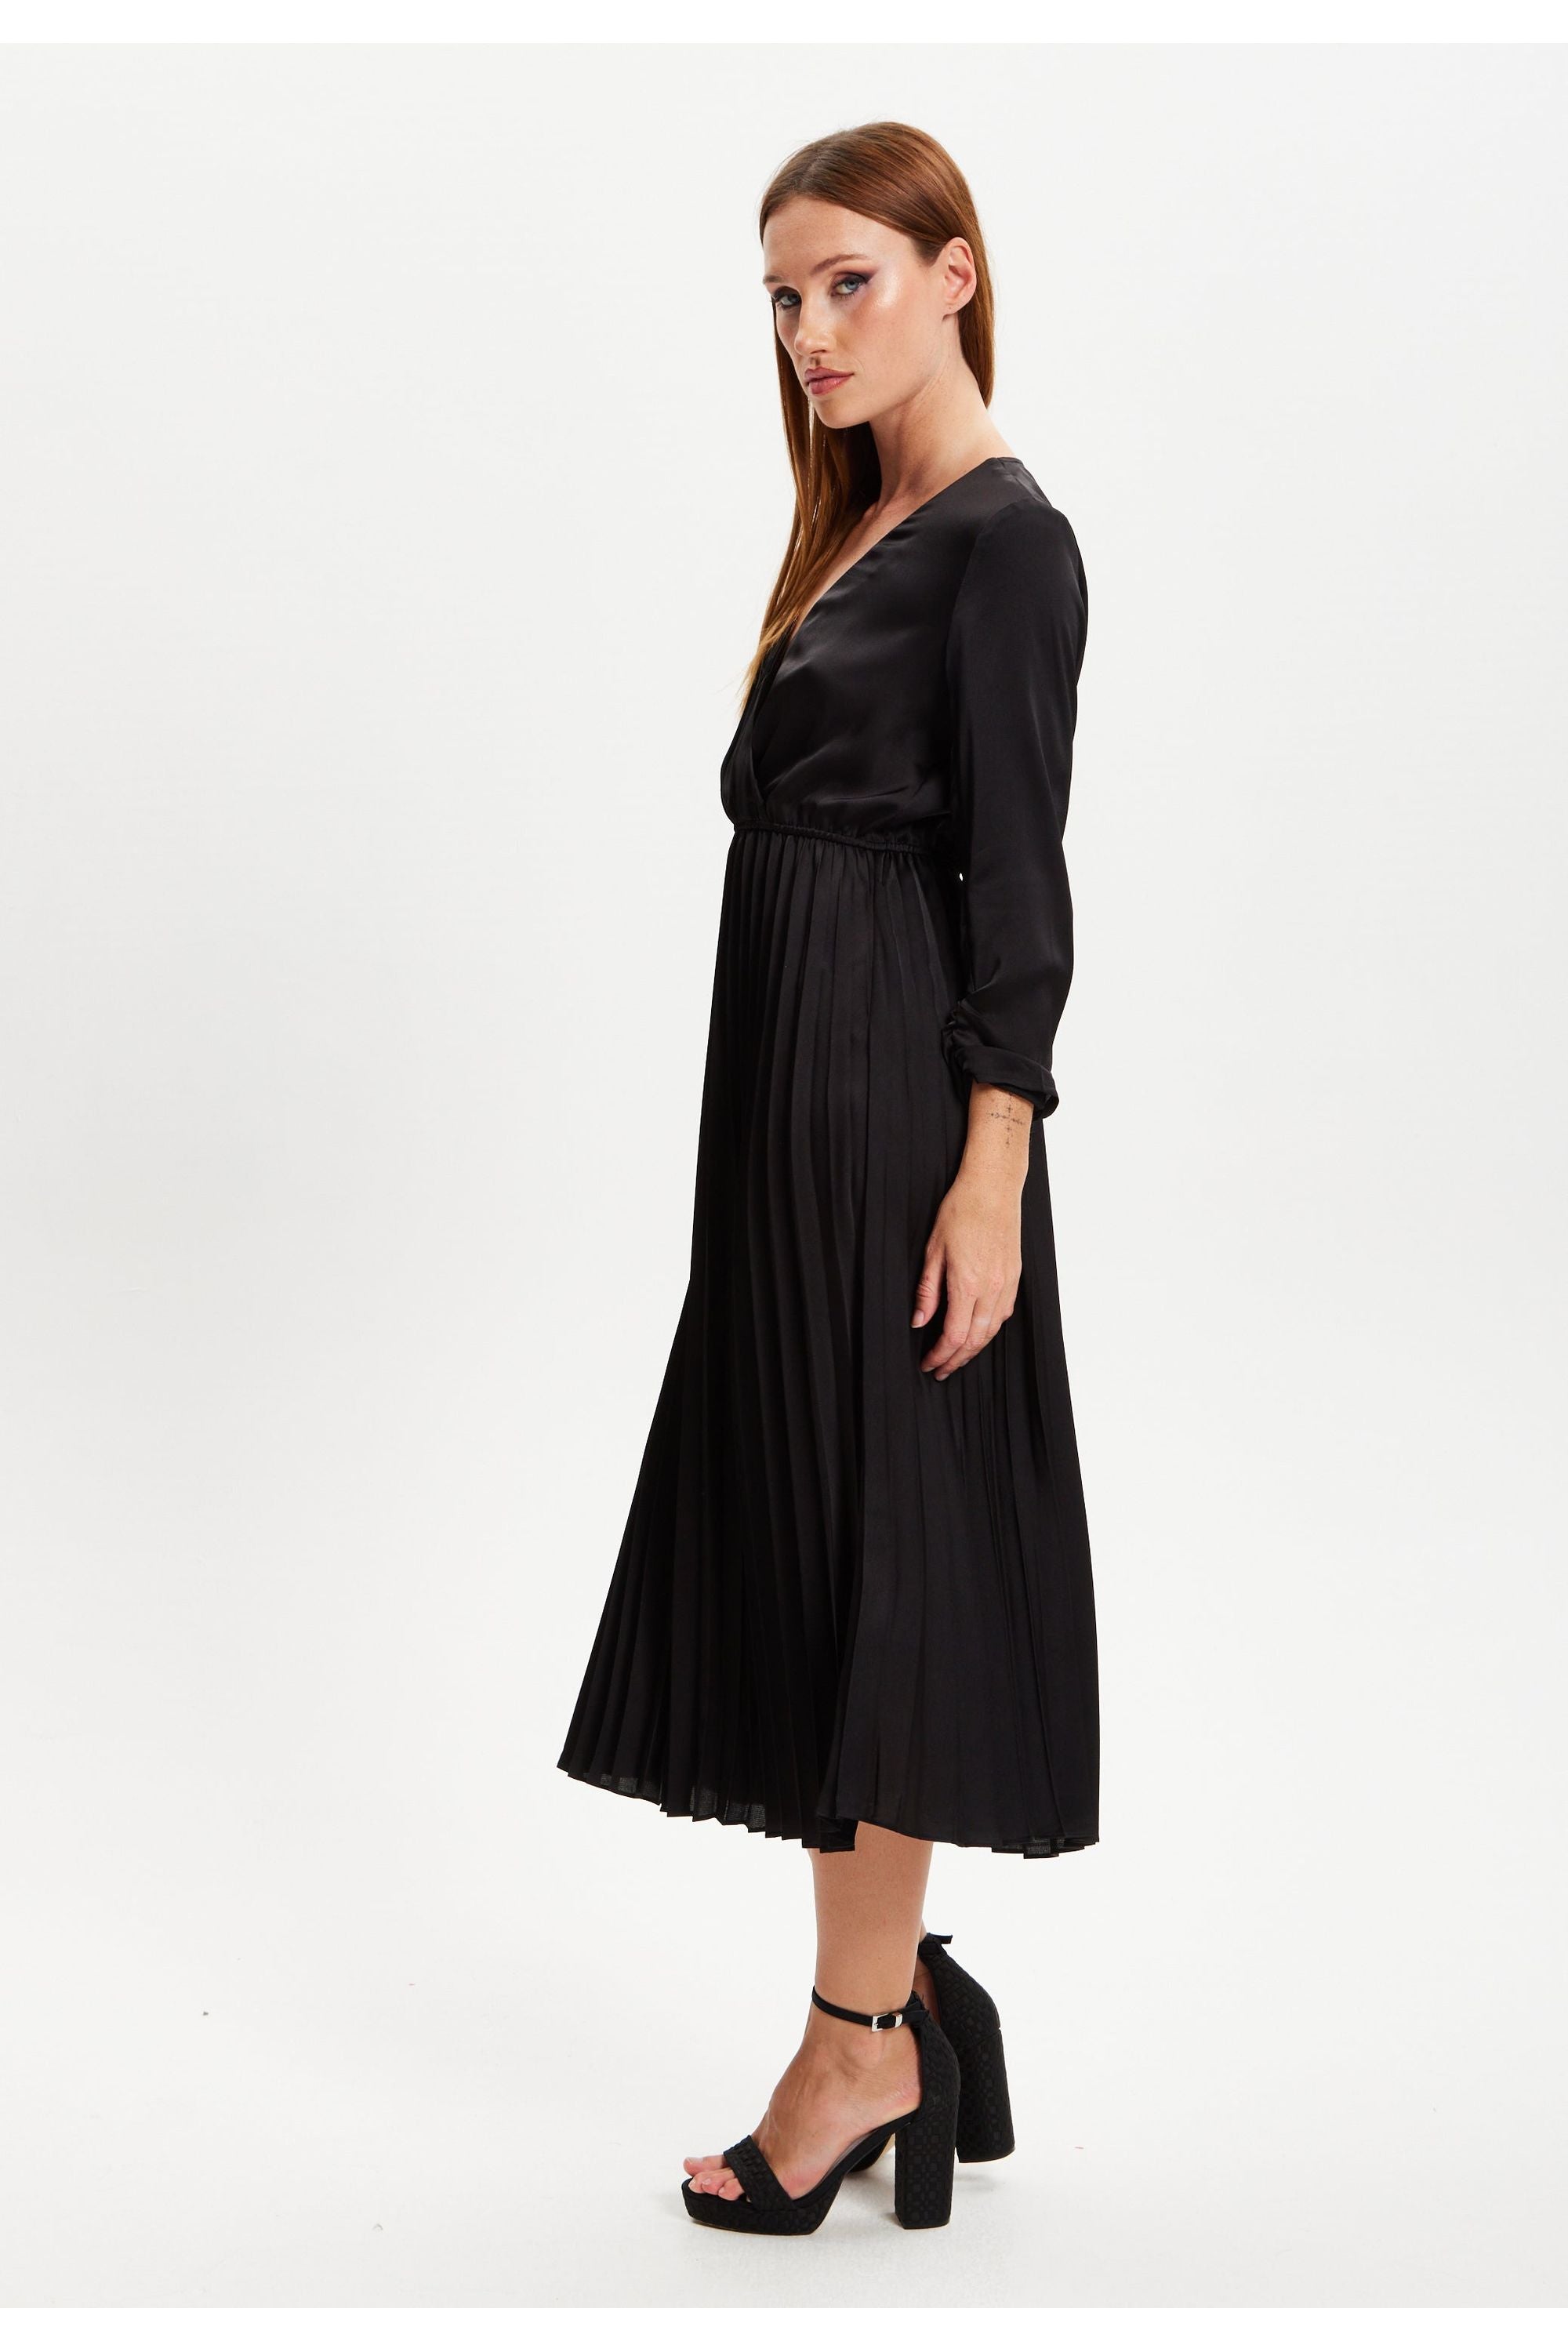 Black Midi Dress With Pleat Details EH1908Black